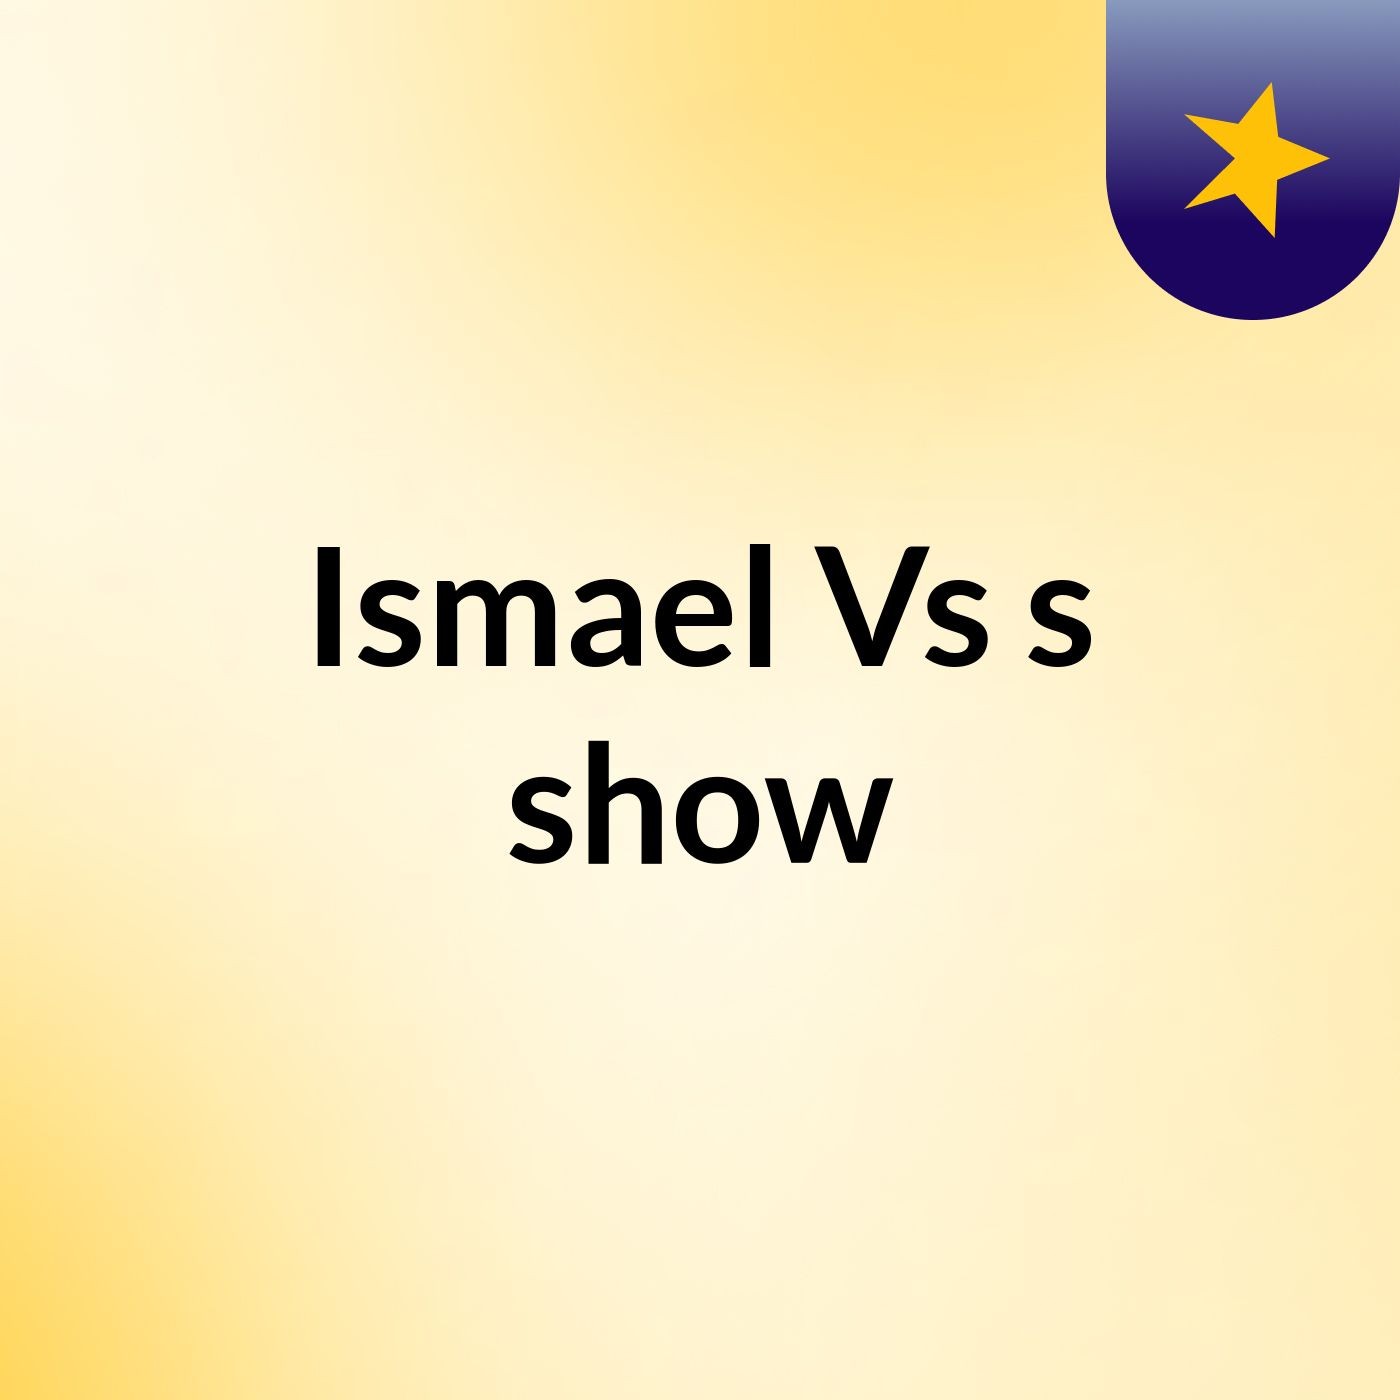 Ismael Vs's show